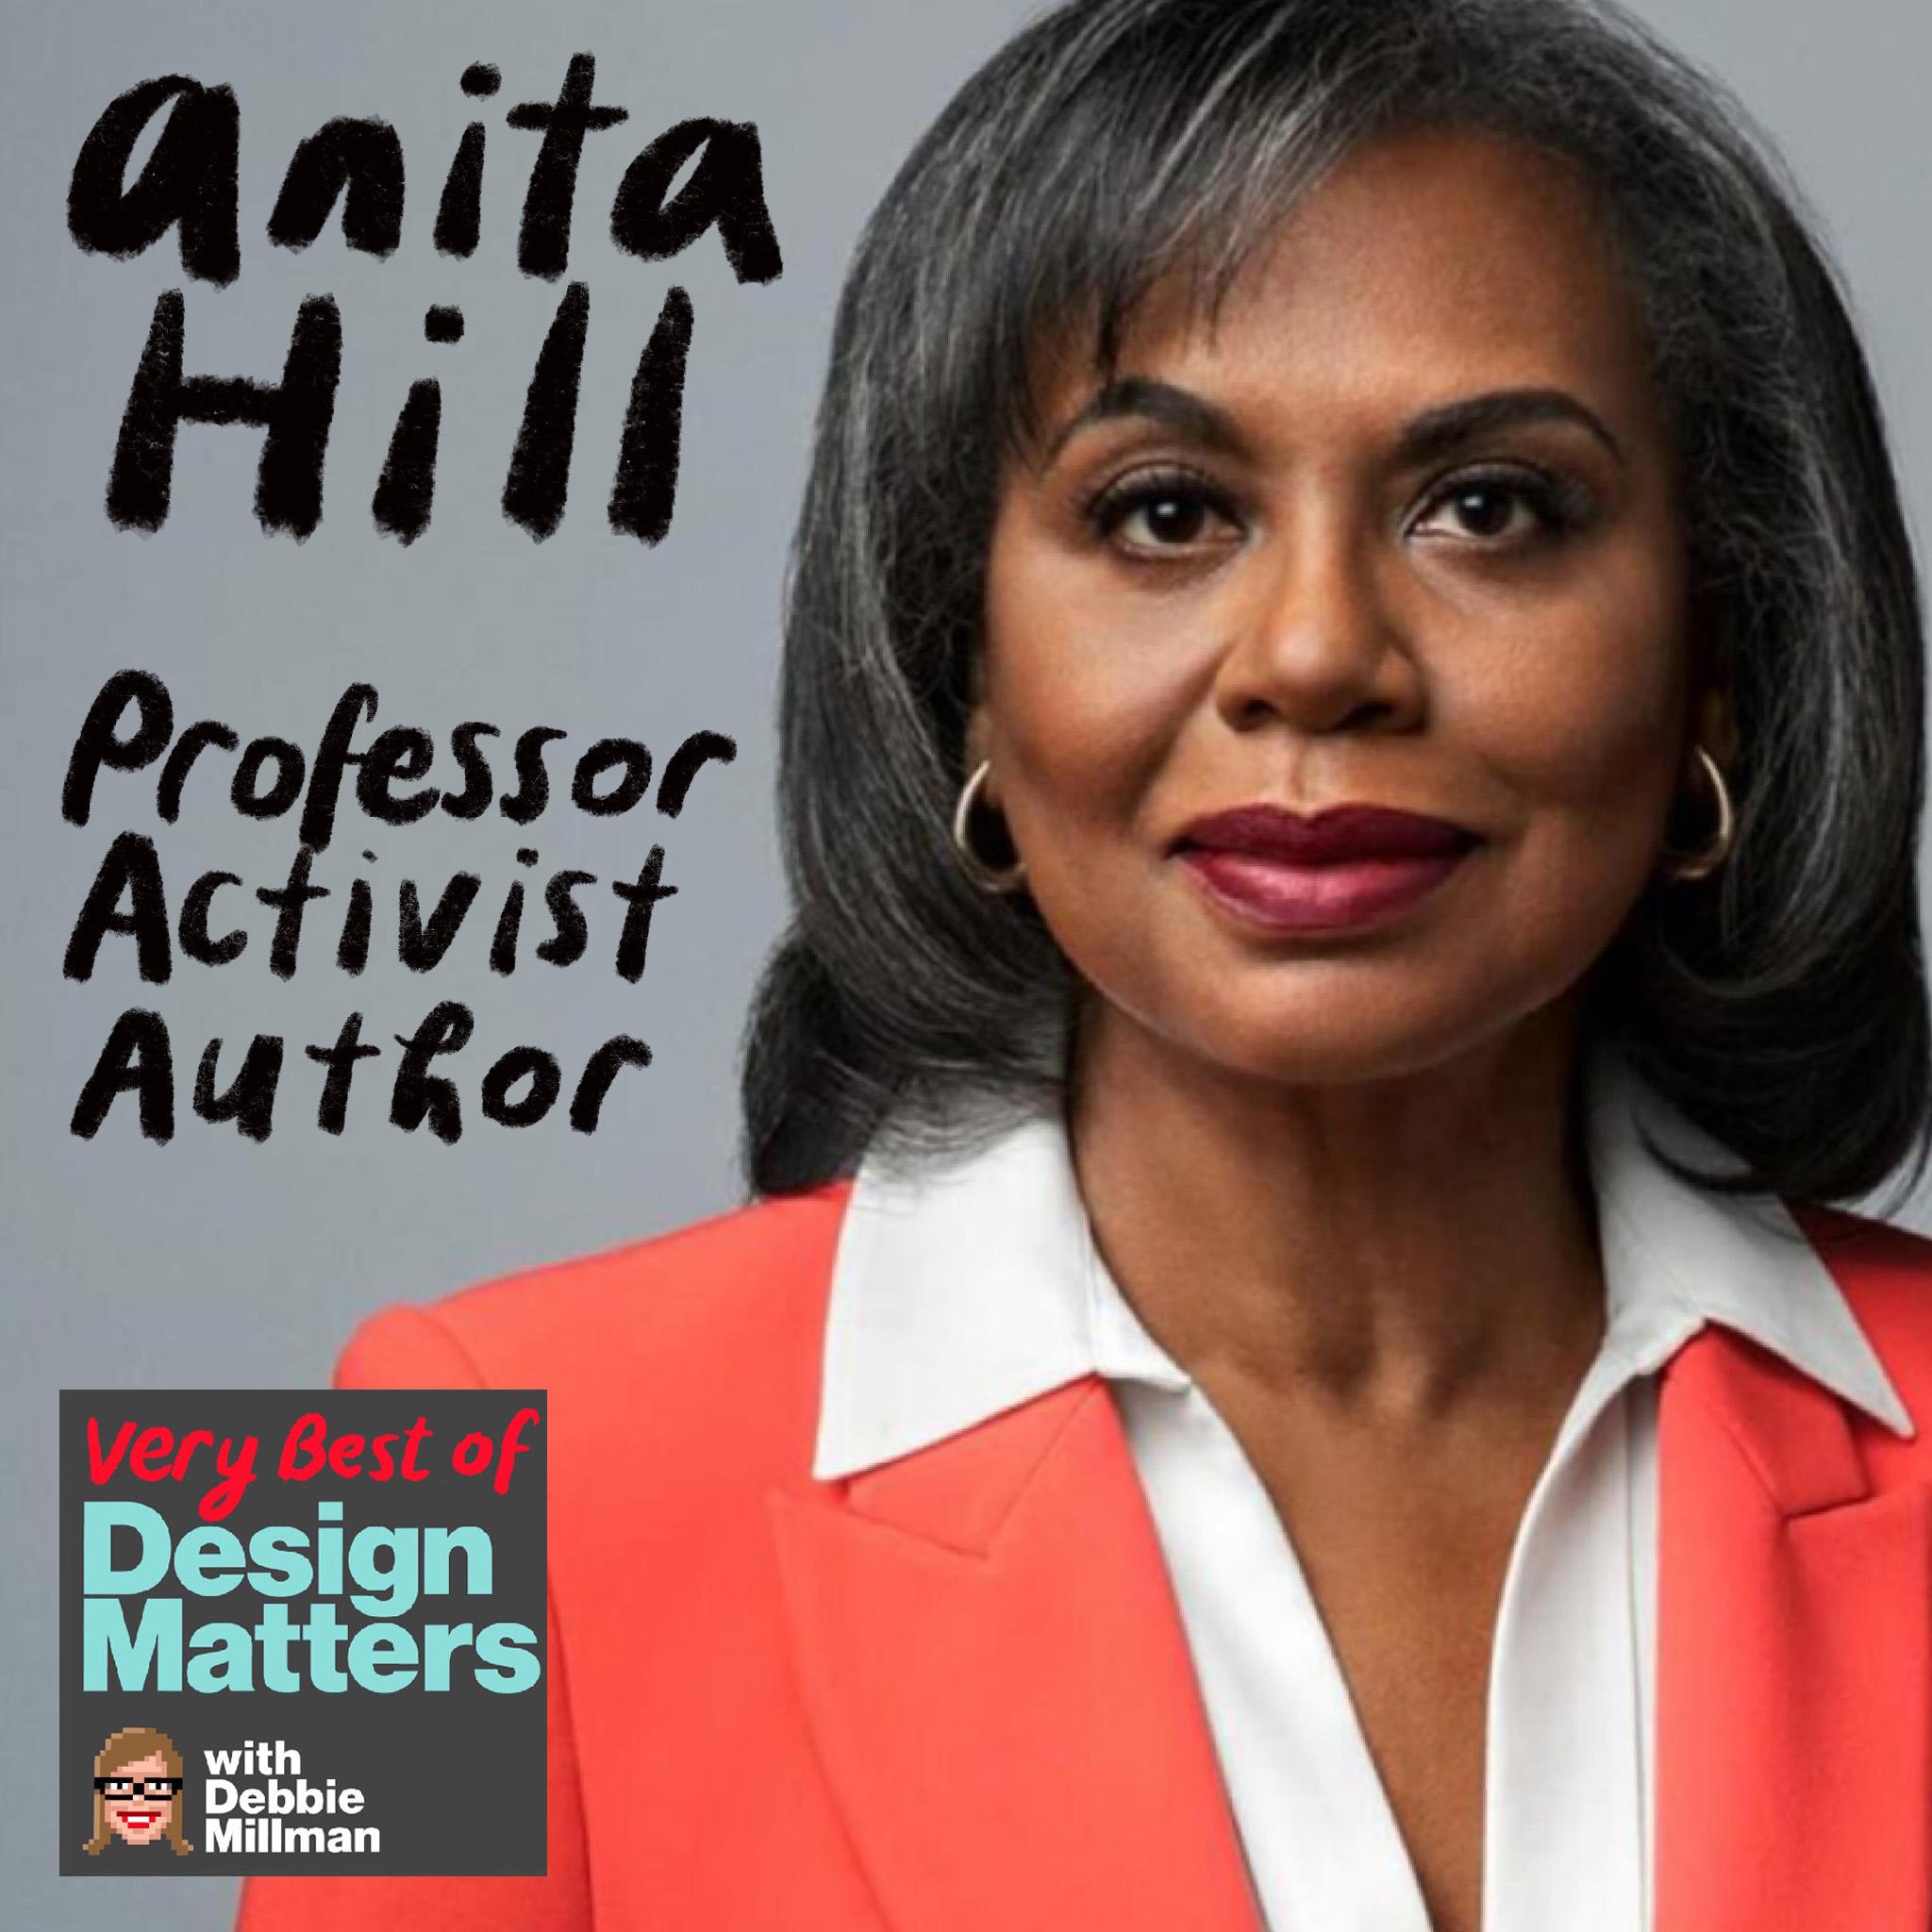 Thumbnail for "Best of Design Matters: Anita Hill".